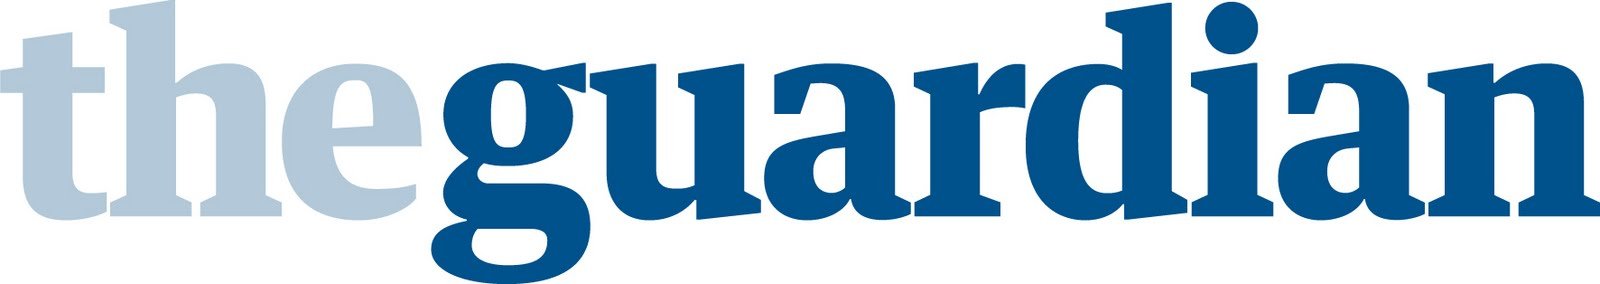 the-guardian-logo.jpeg